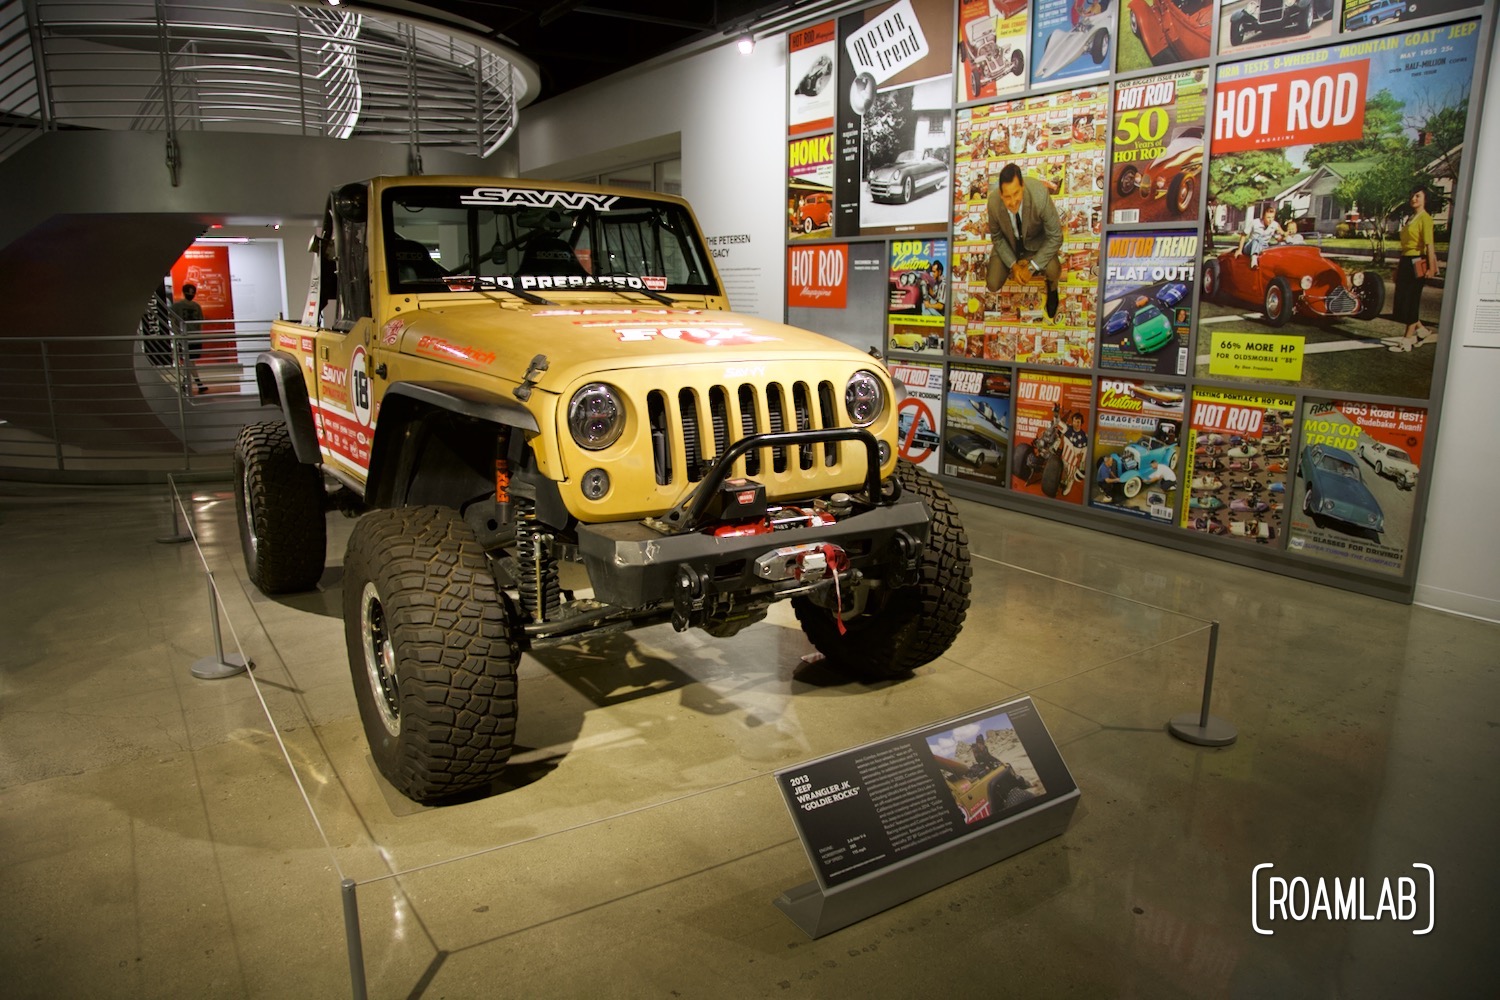 Golden brown 2013 Jeep Wrangler JK on display at the Petersen Automotive Museum